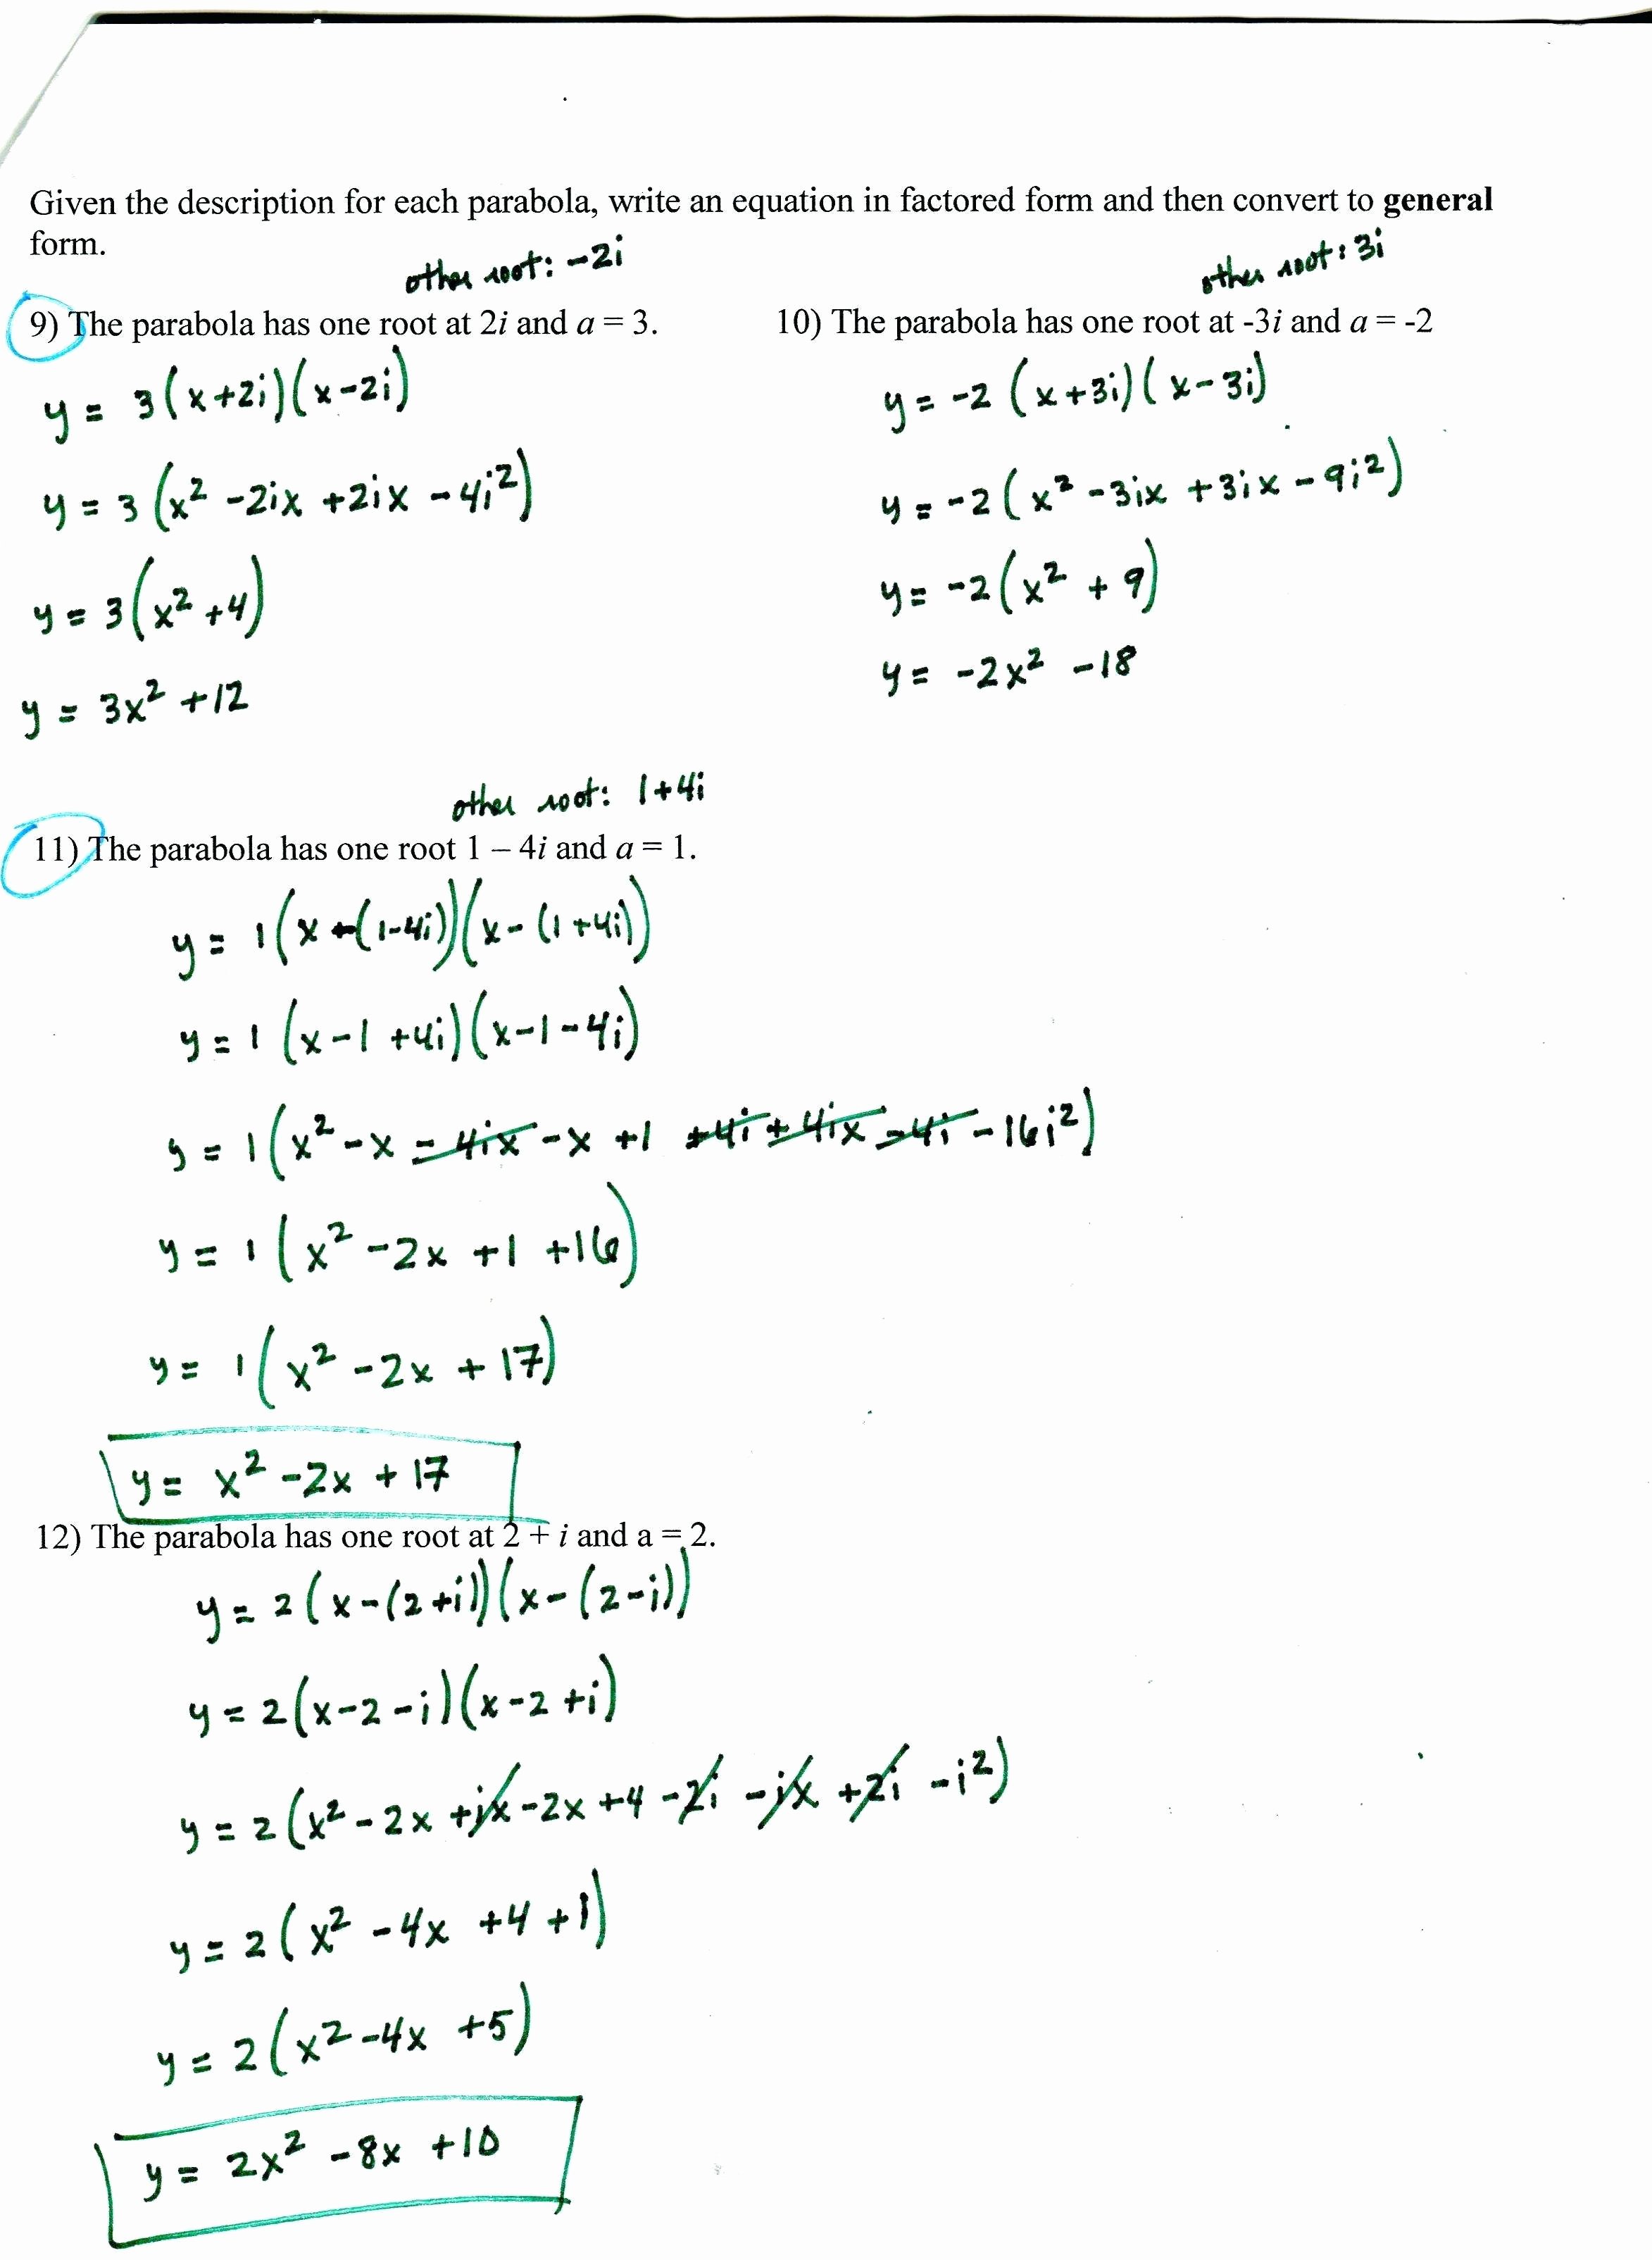 Solving Logarithmic Equations Worksheet